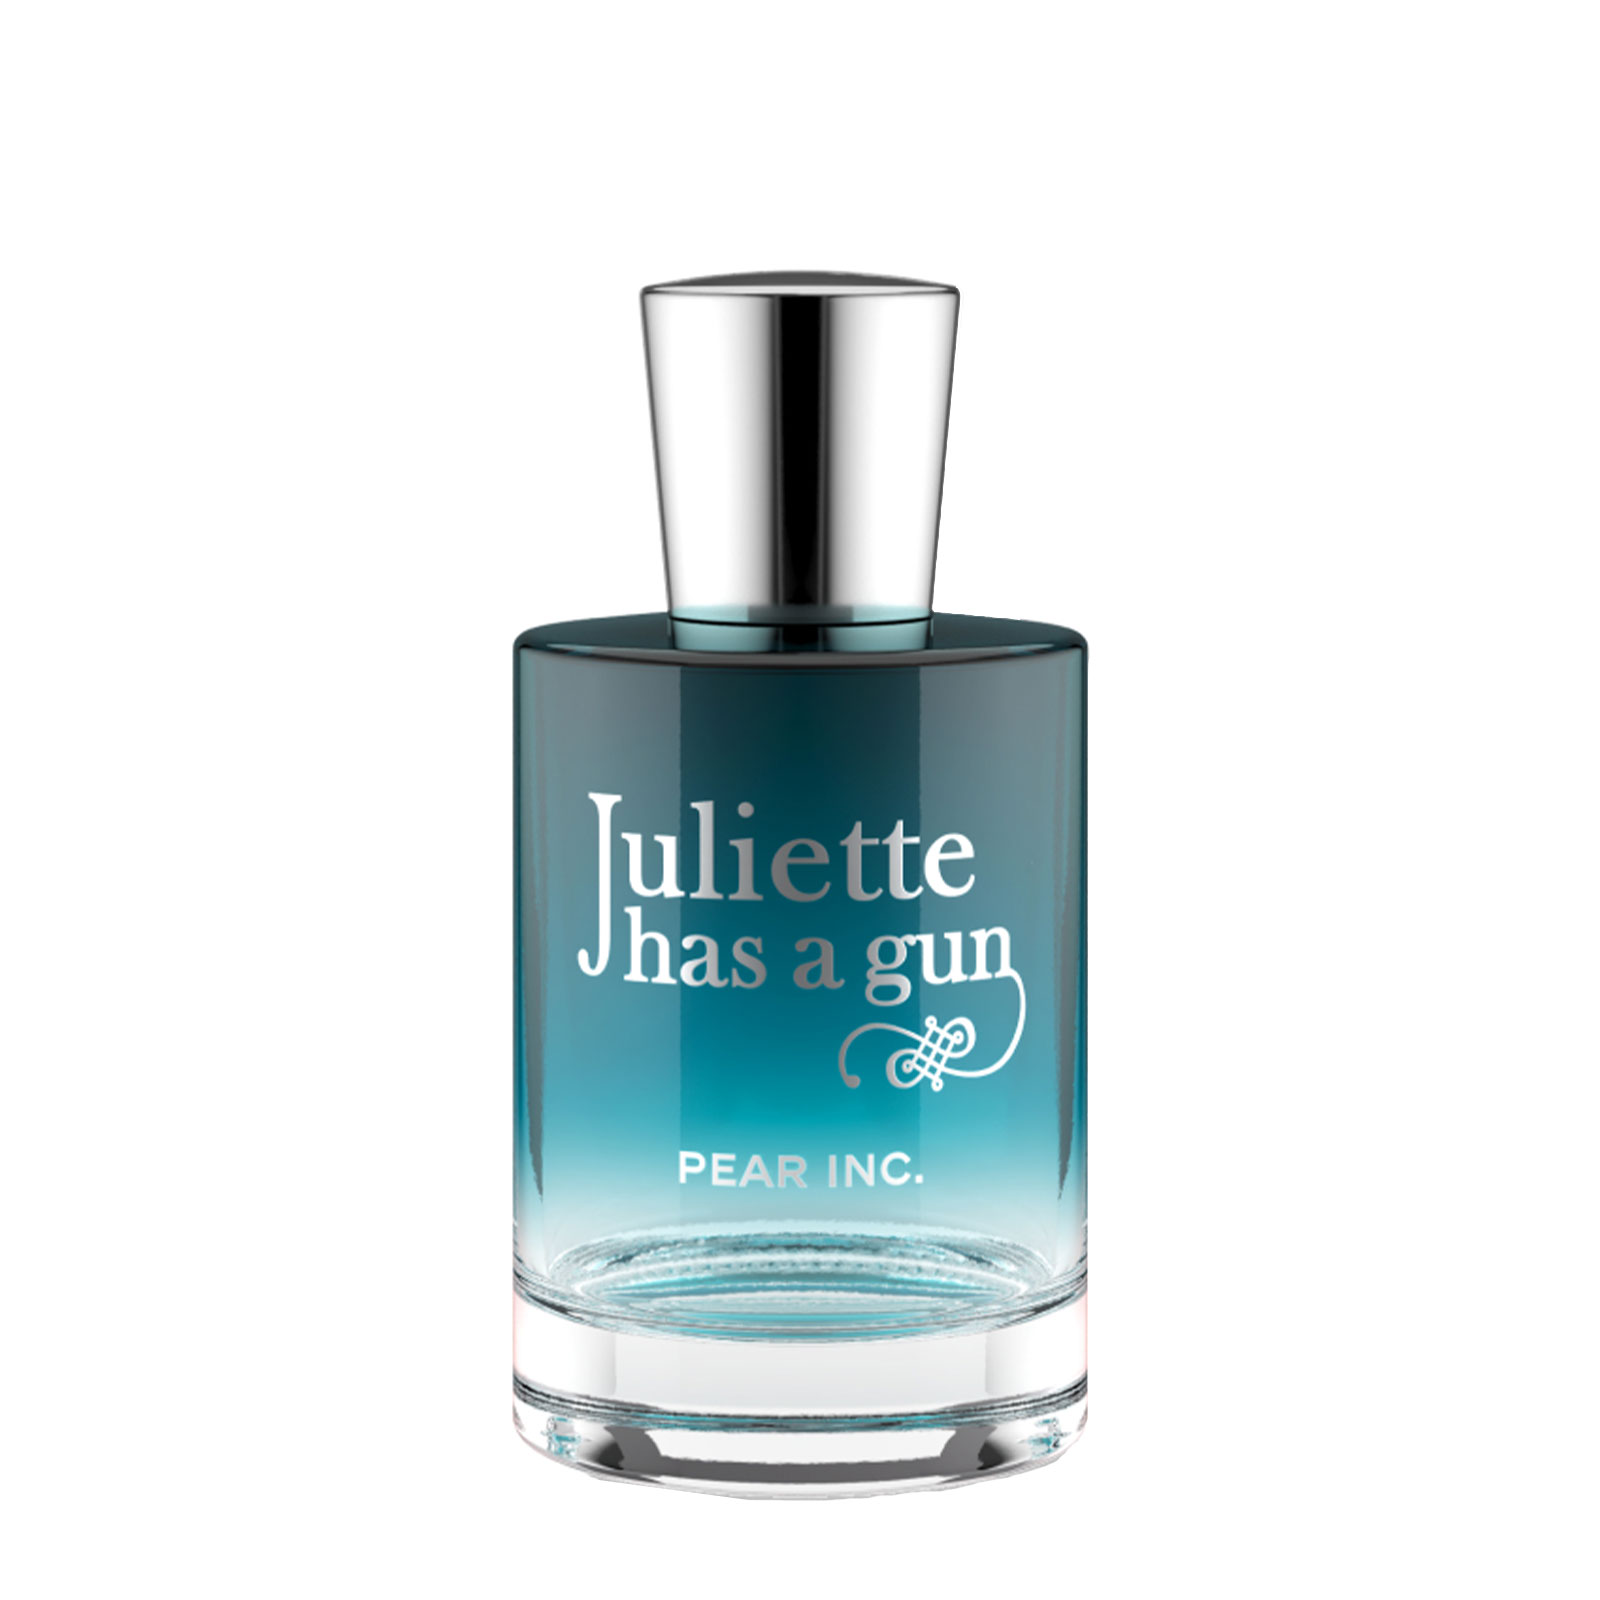 Juliette Has A Gun Pear Inc. 50Ml Eau De Parfum